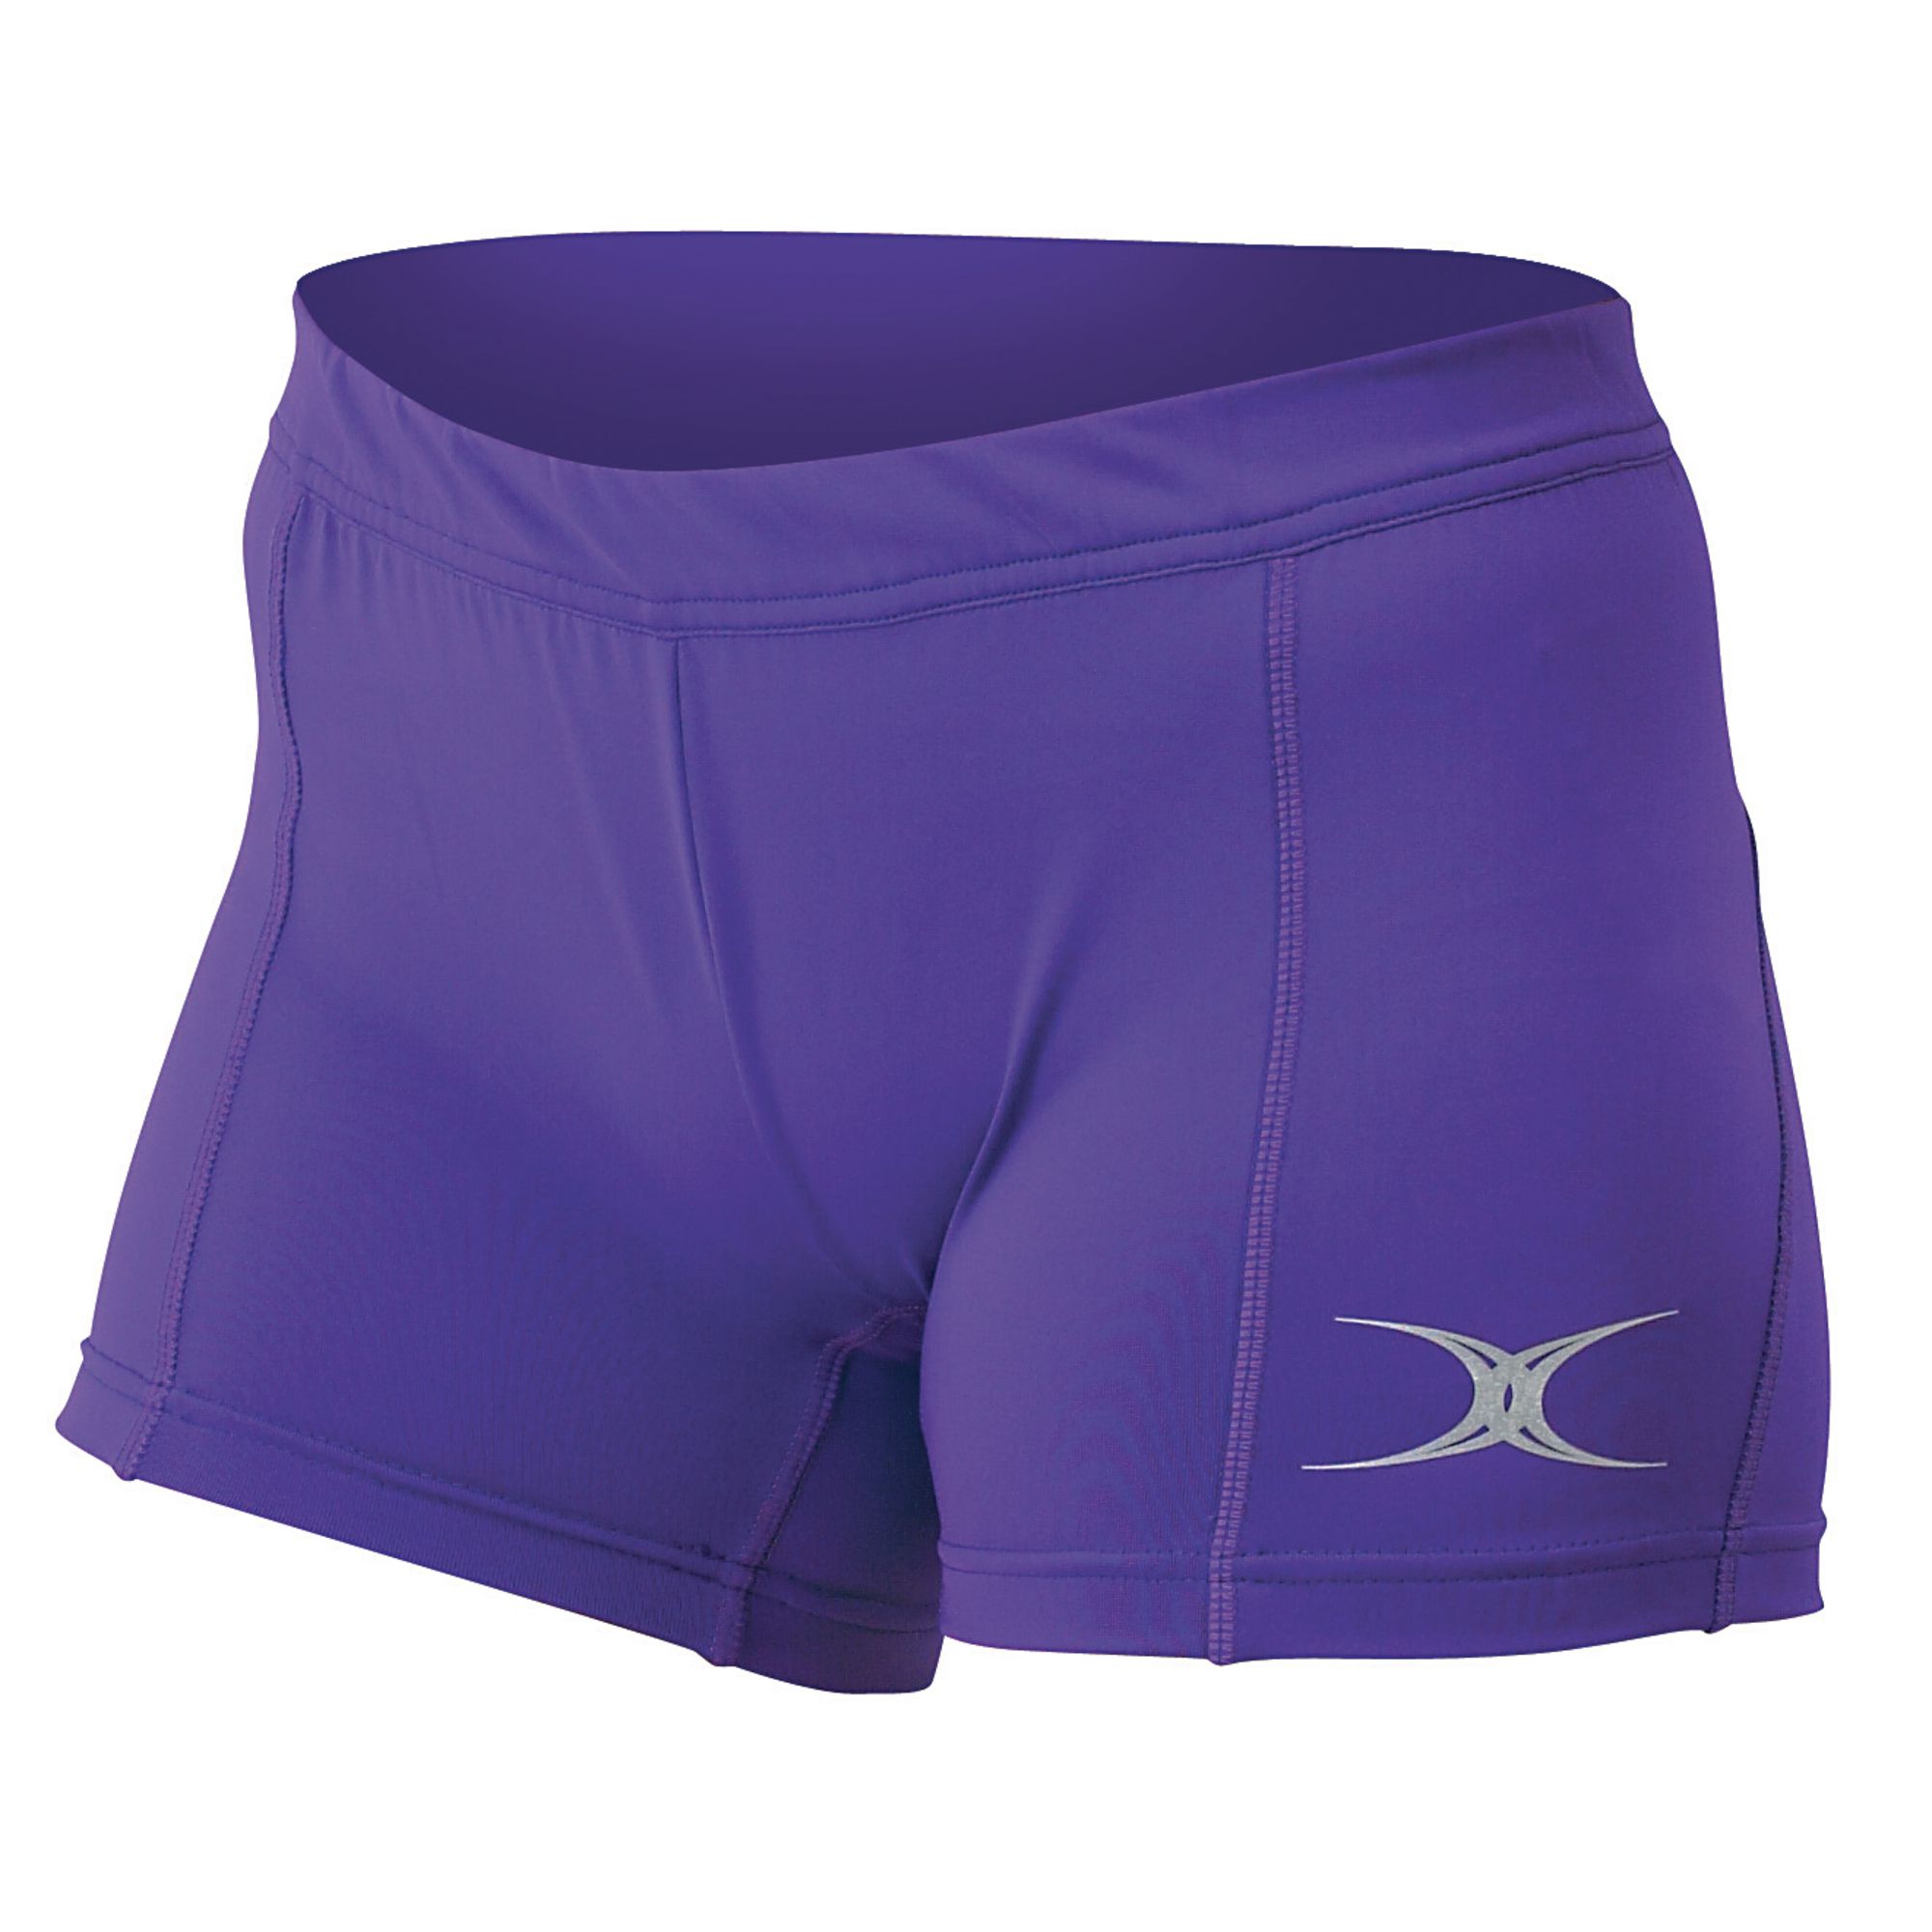 Gilbert Eclipse Nball Shorts S12 Purple